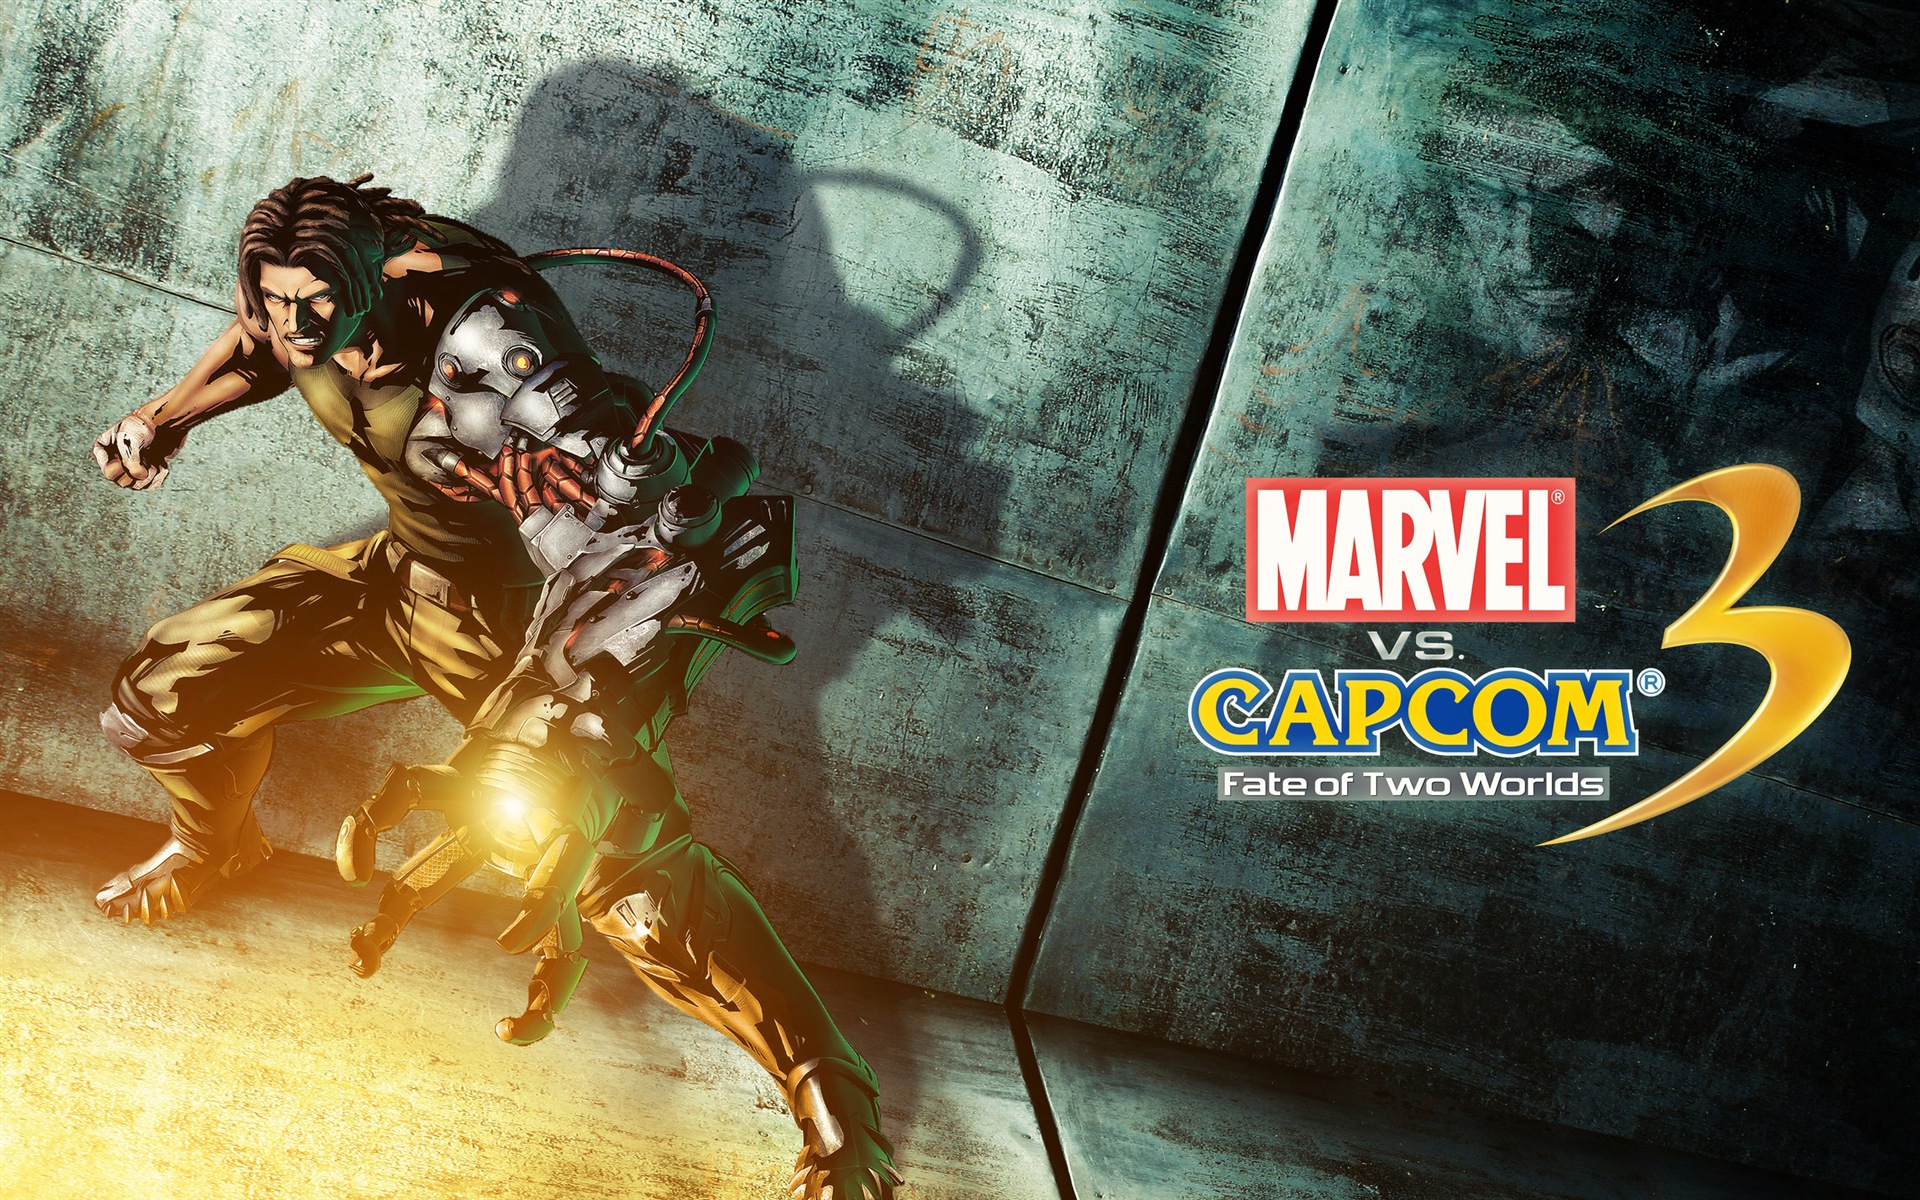 Marvel VS. Capcom 3: Fate of Two Worlds 漫畫英雄VS.卡普空3 高清遊戲壁紙 #8 - 1920x1200